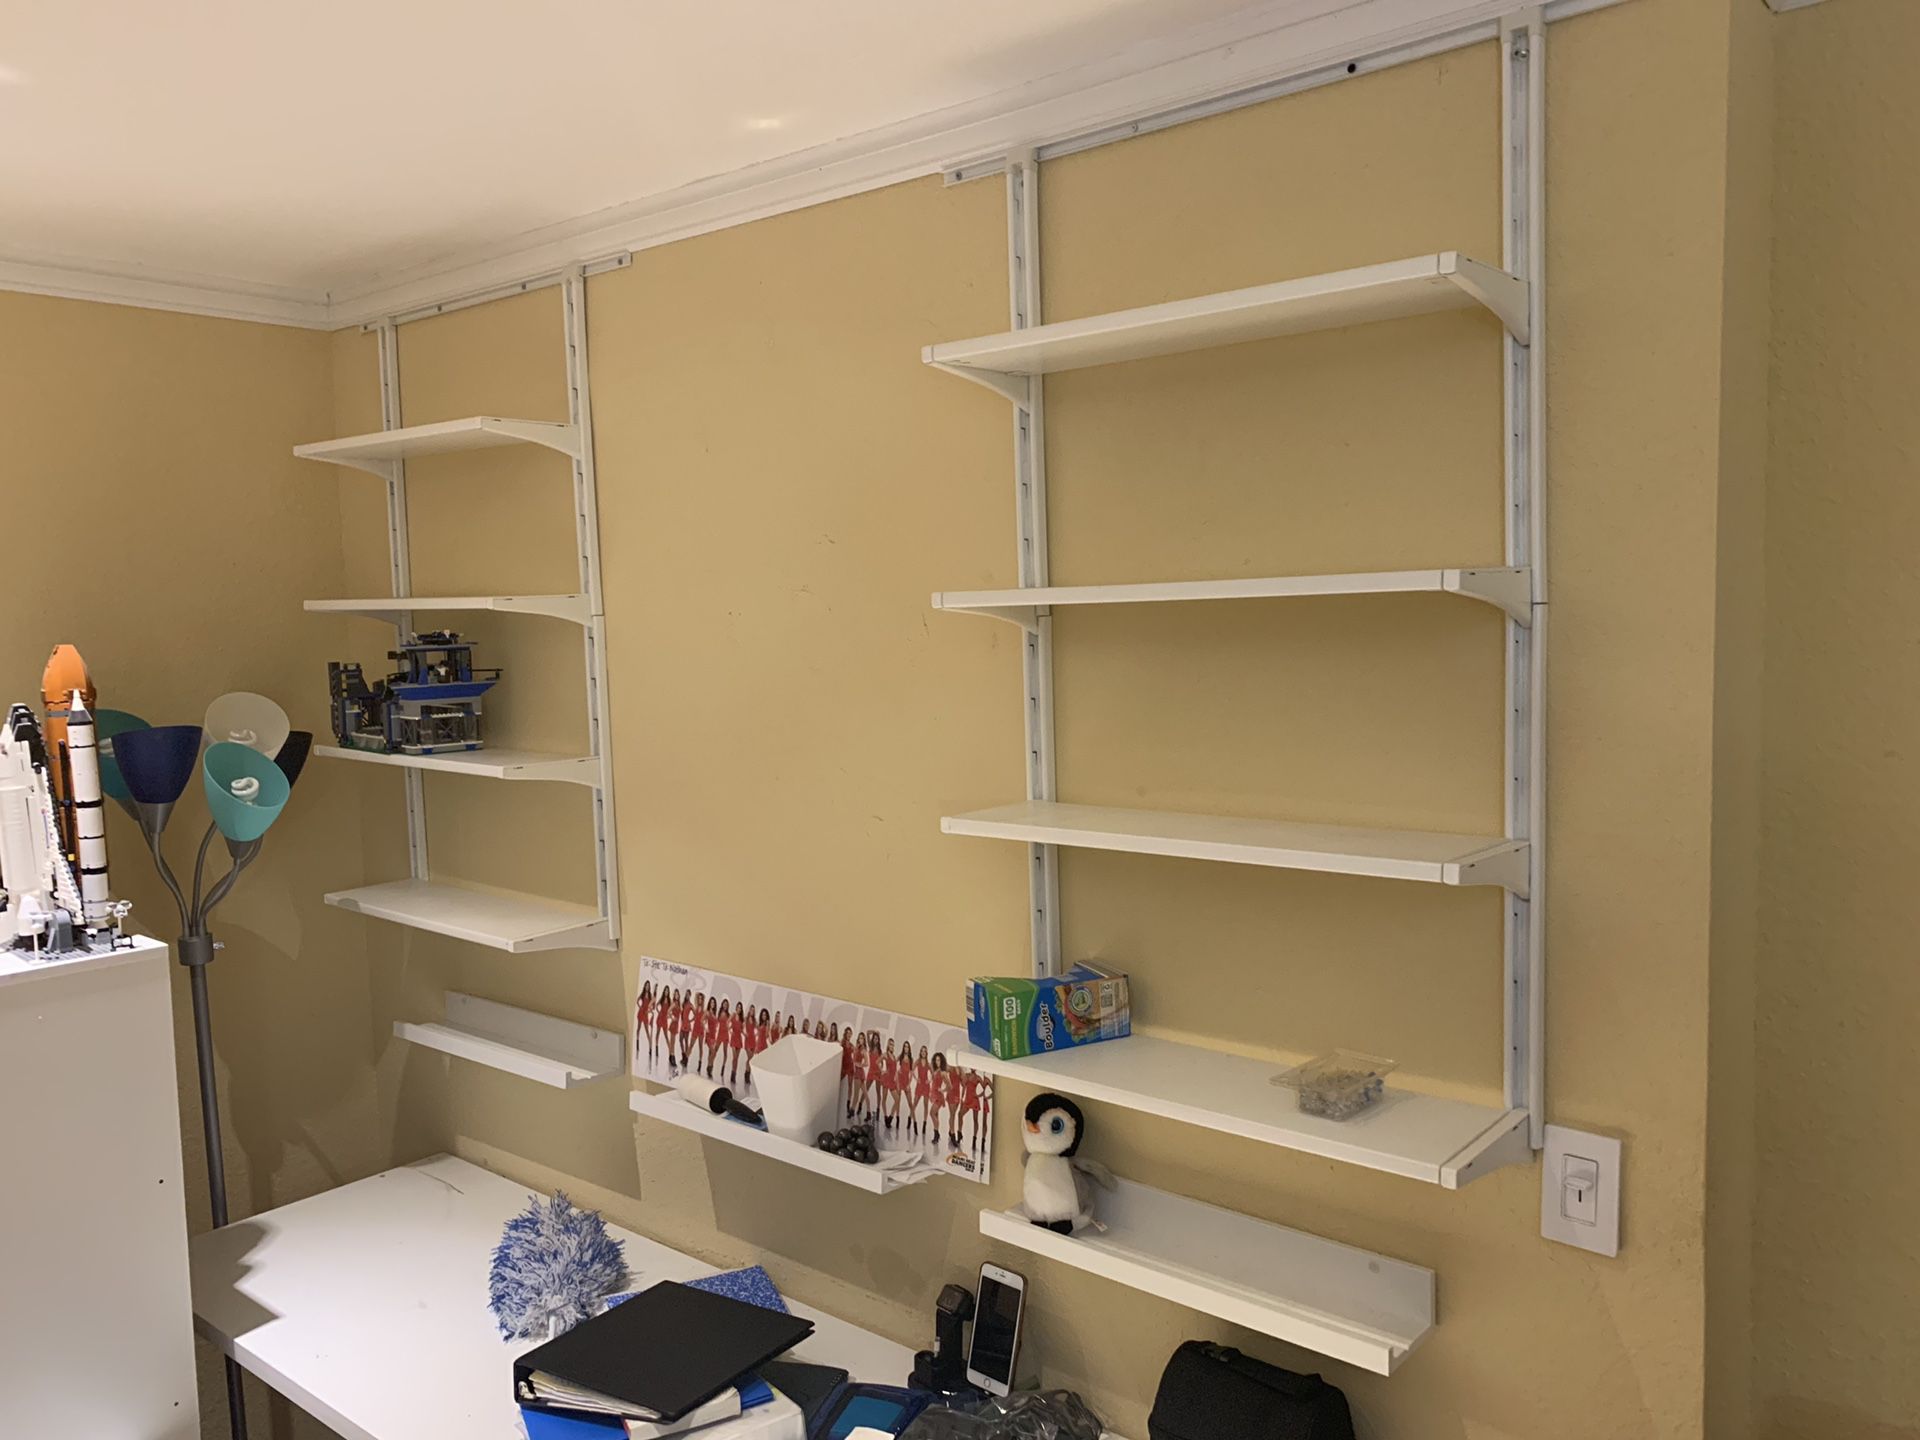 IKEA adjustable wall shelves.